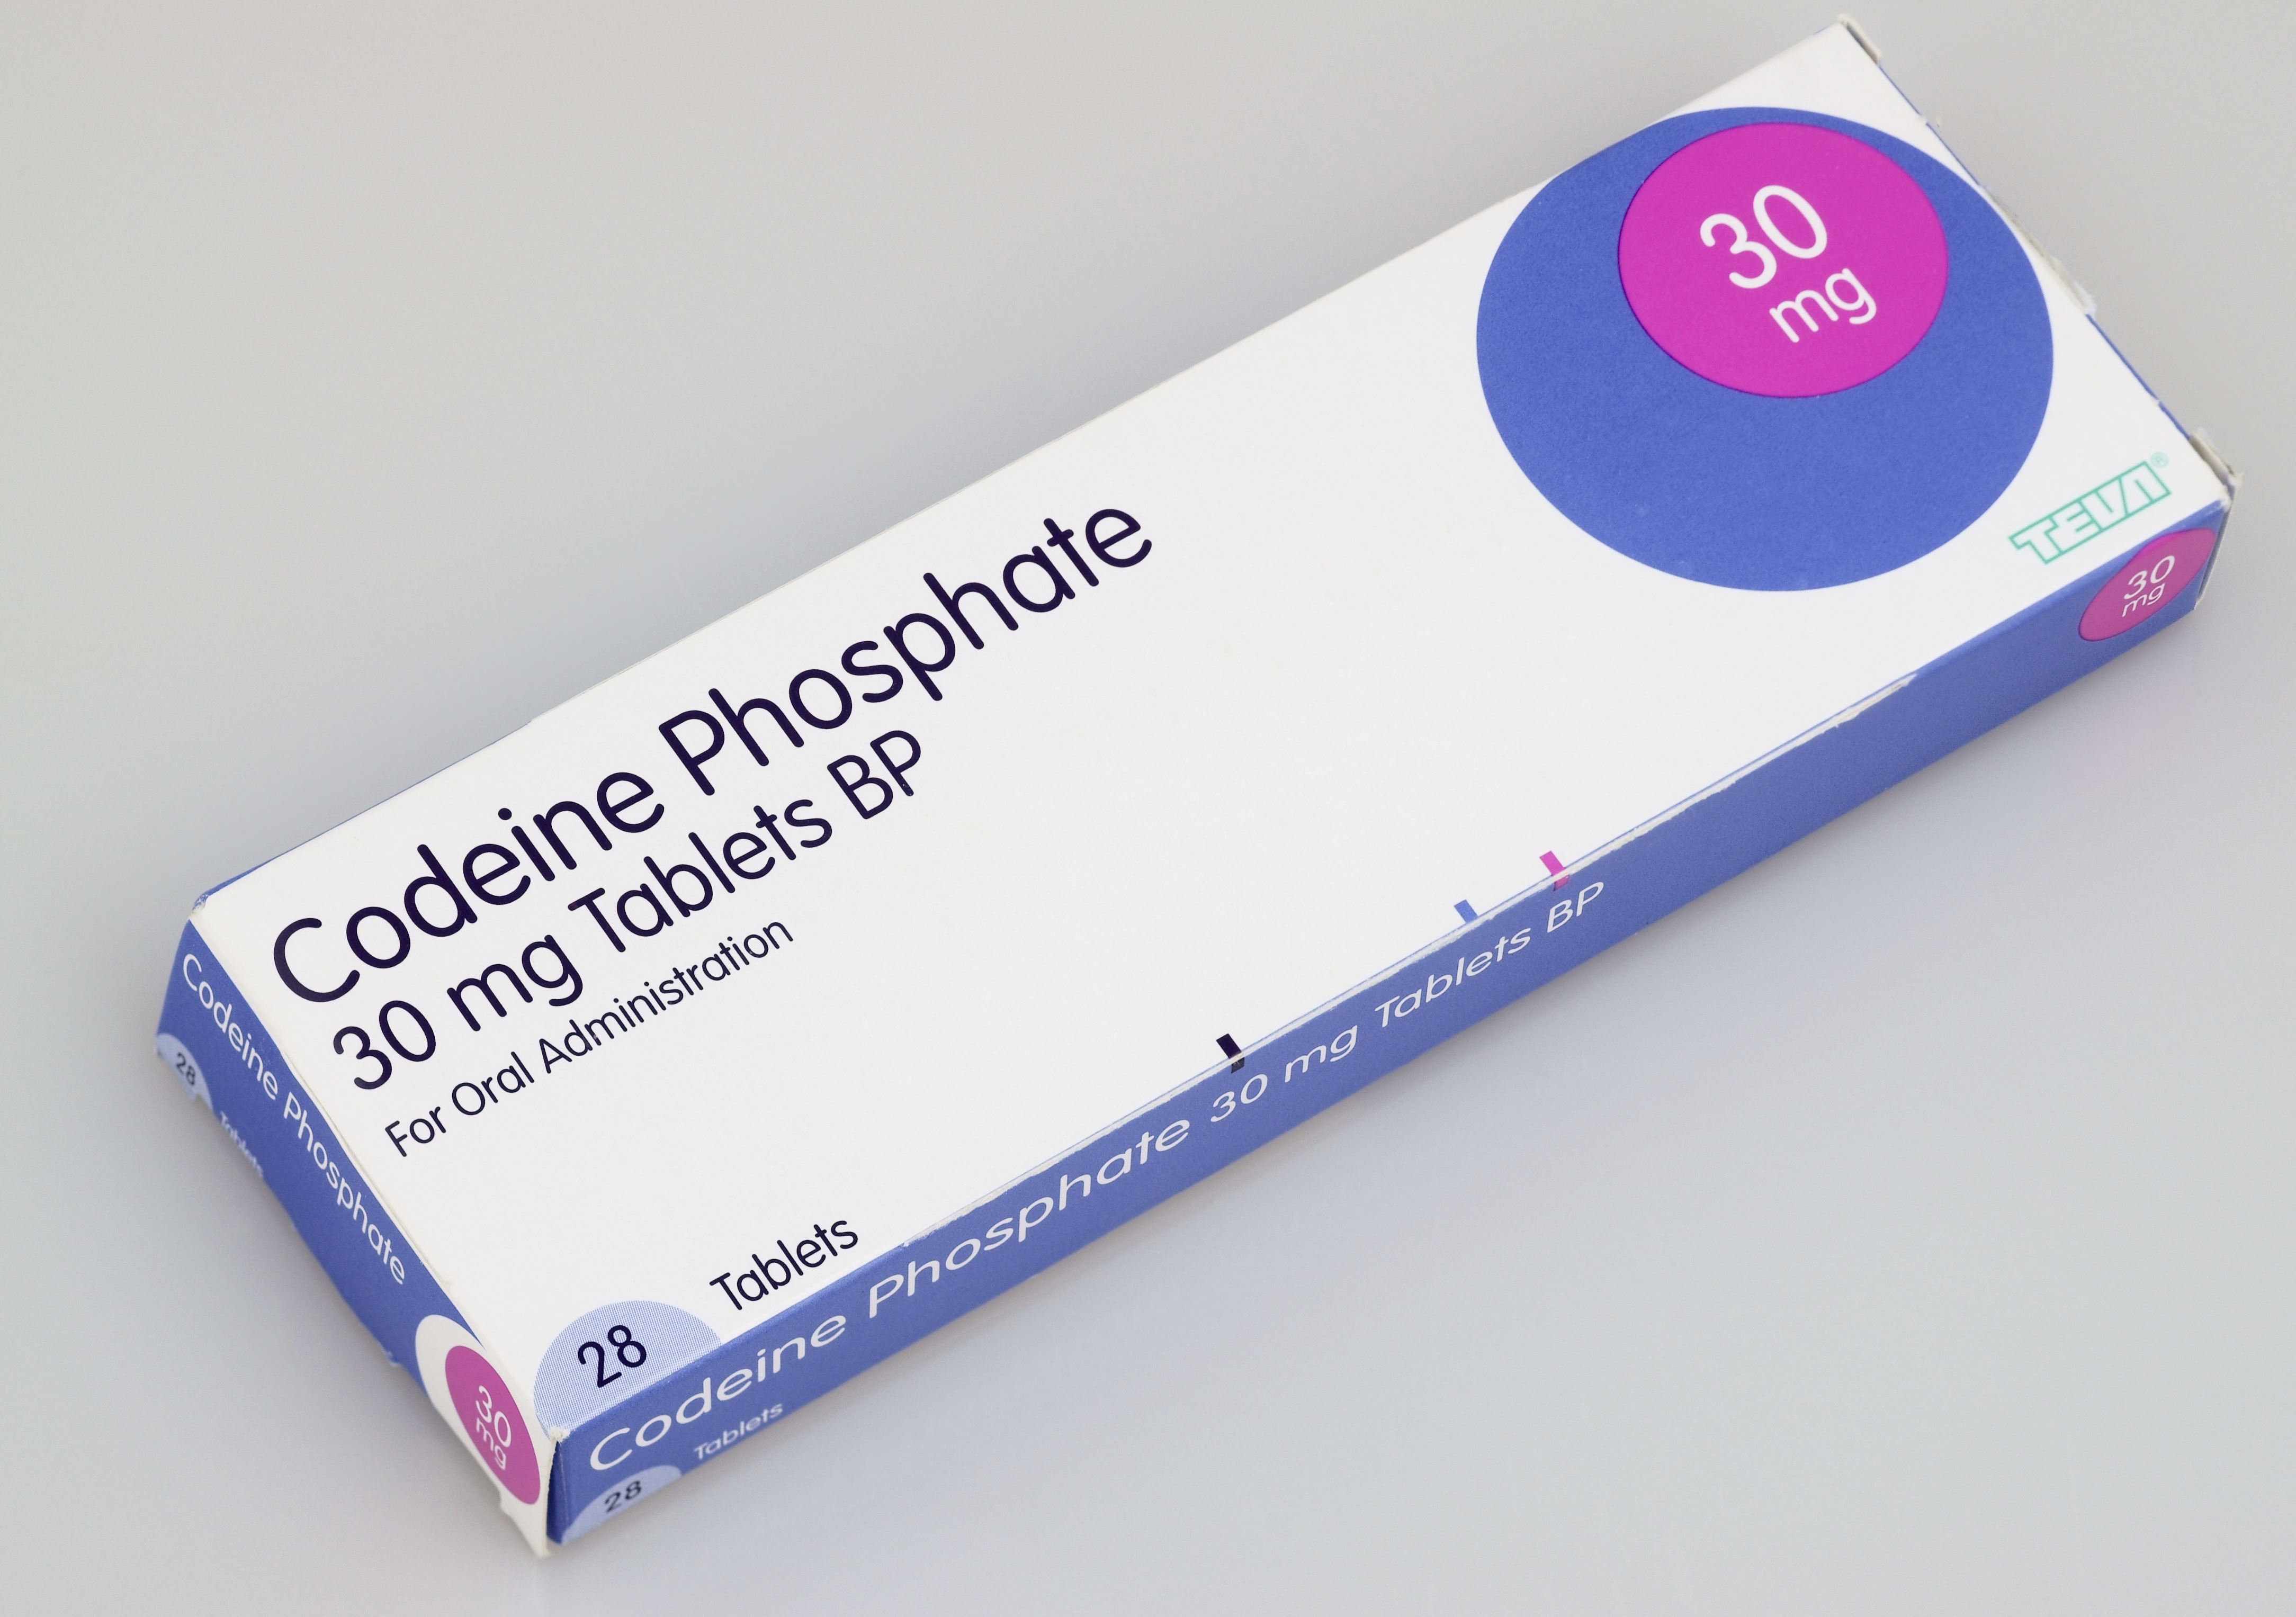 Medicines containing codeine could become prescription 